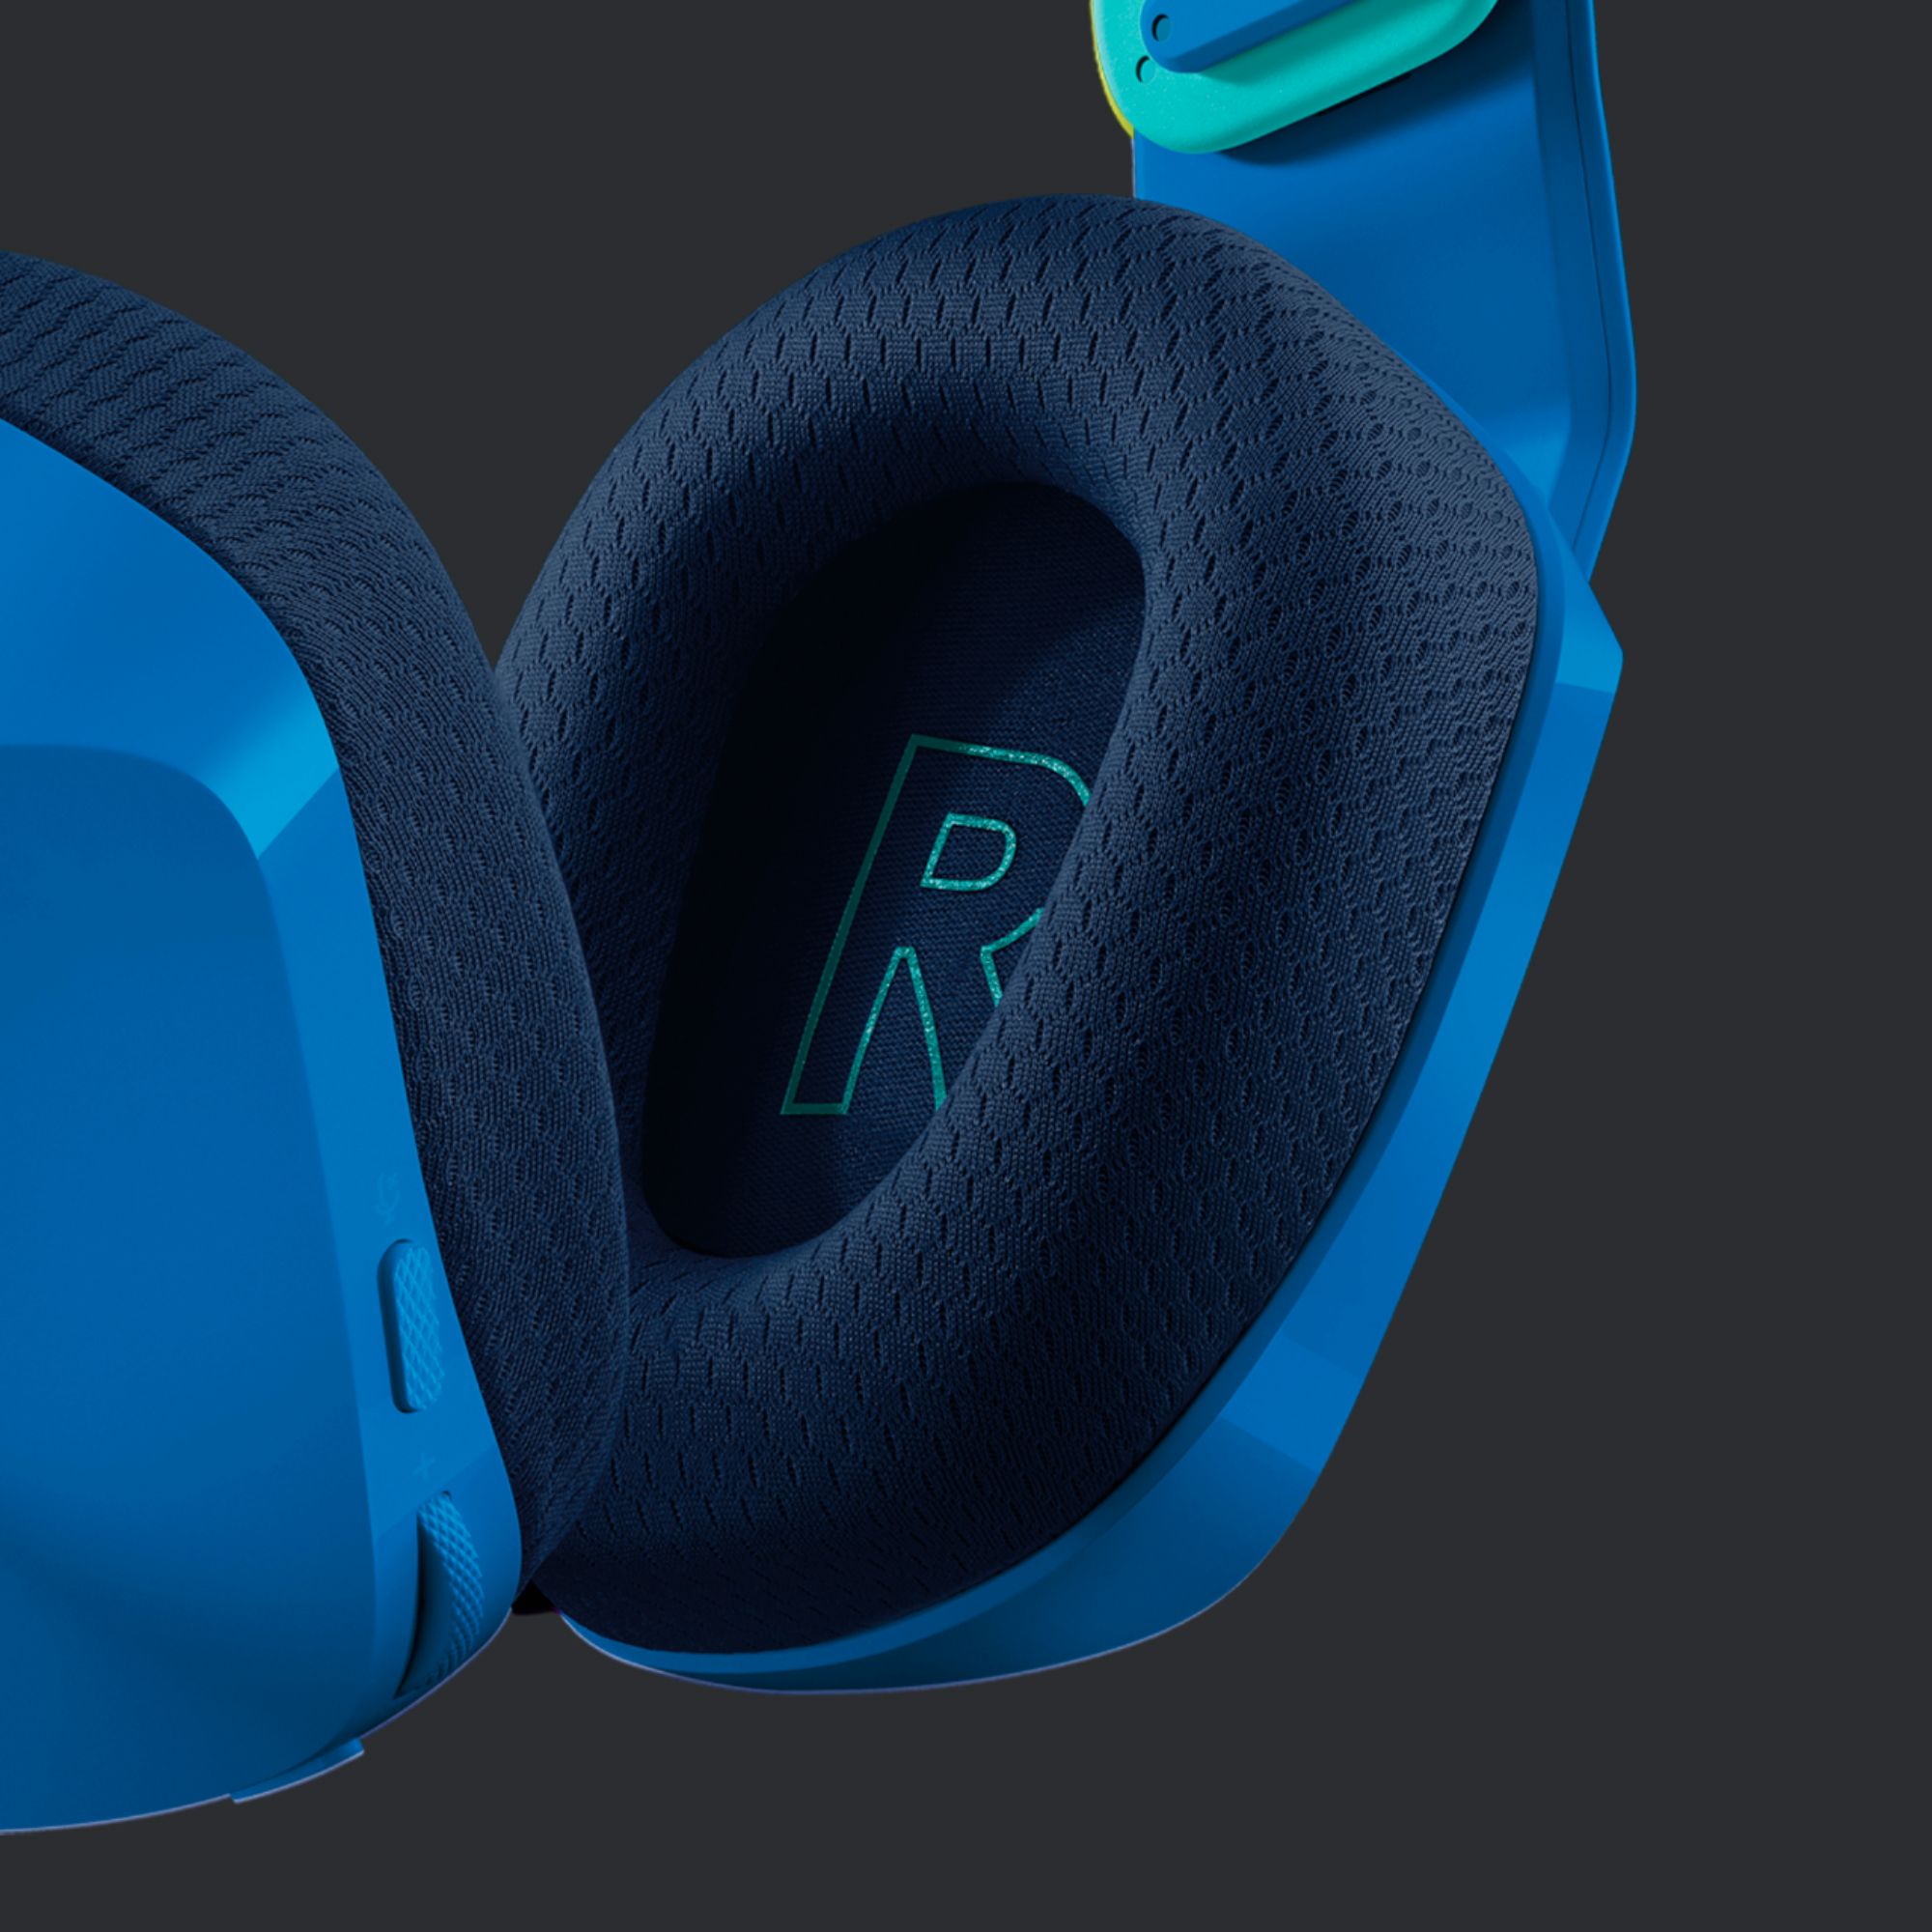 Logitech G430 Black/Blue Over the Ear Gaming Headset for sale